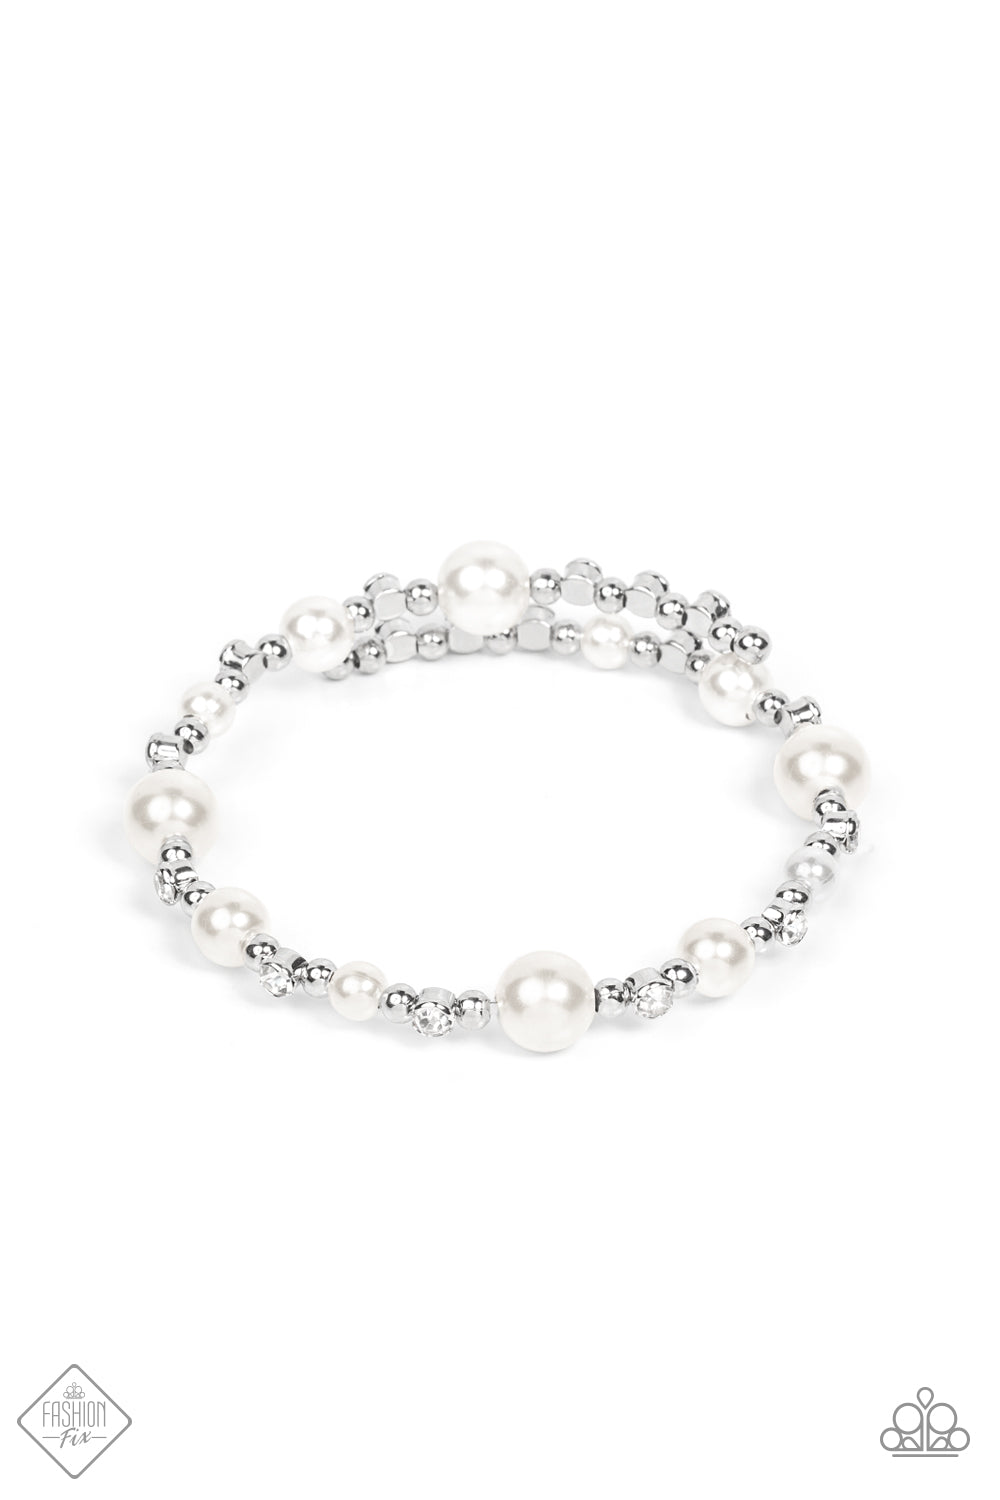 Paparazzi Chicly Celebrity Fashion Fix - White Bracelet - A Finishing Touch Jewelry